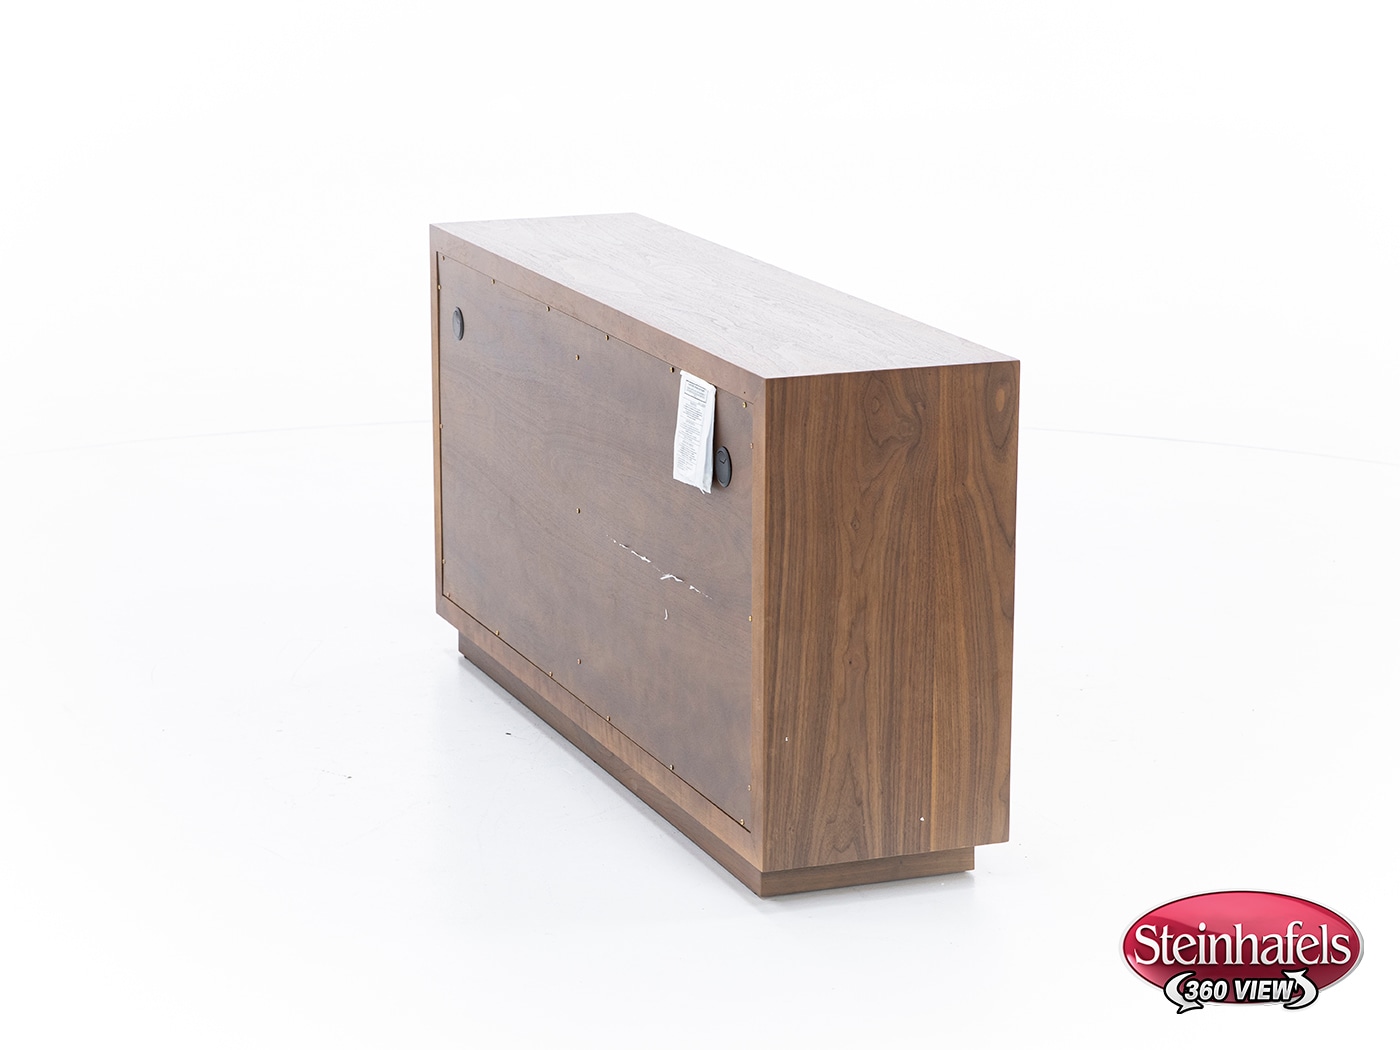 ctoc wood grain chests cabinets  image geo  